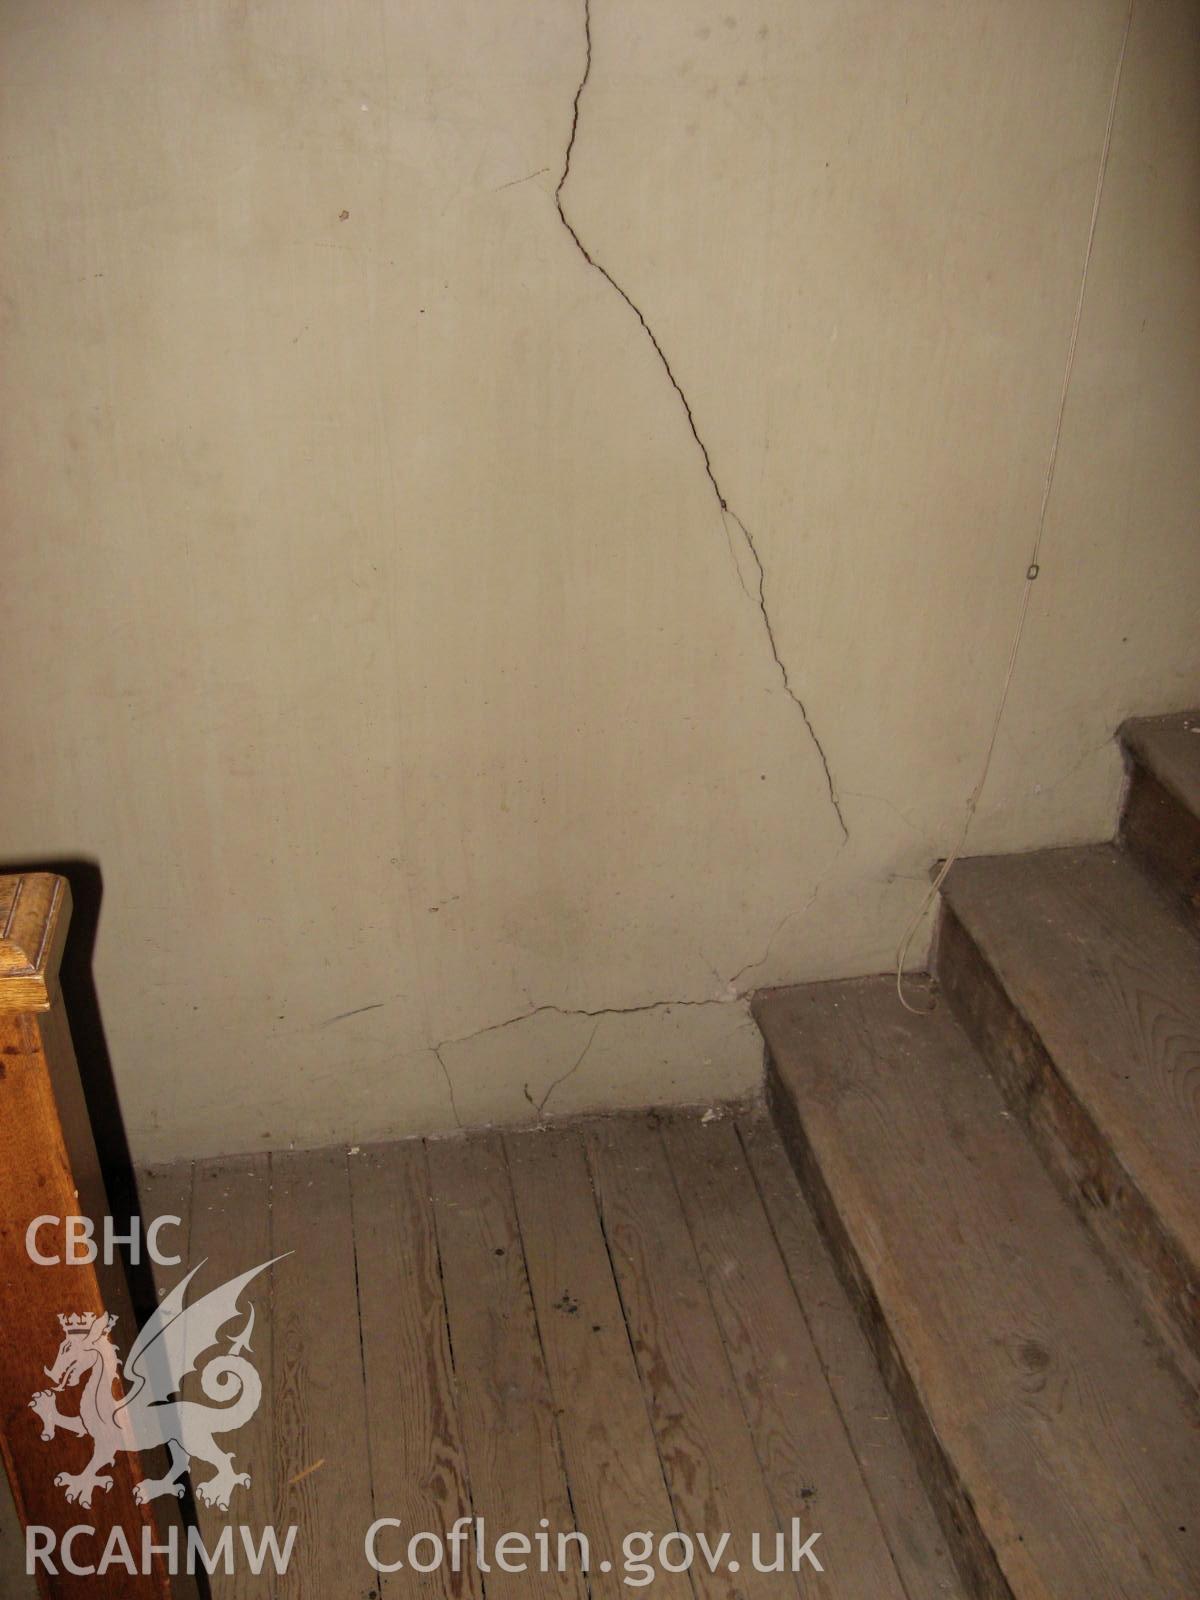 View of ground floor interior - wall plaster cracks